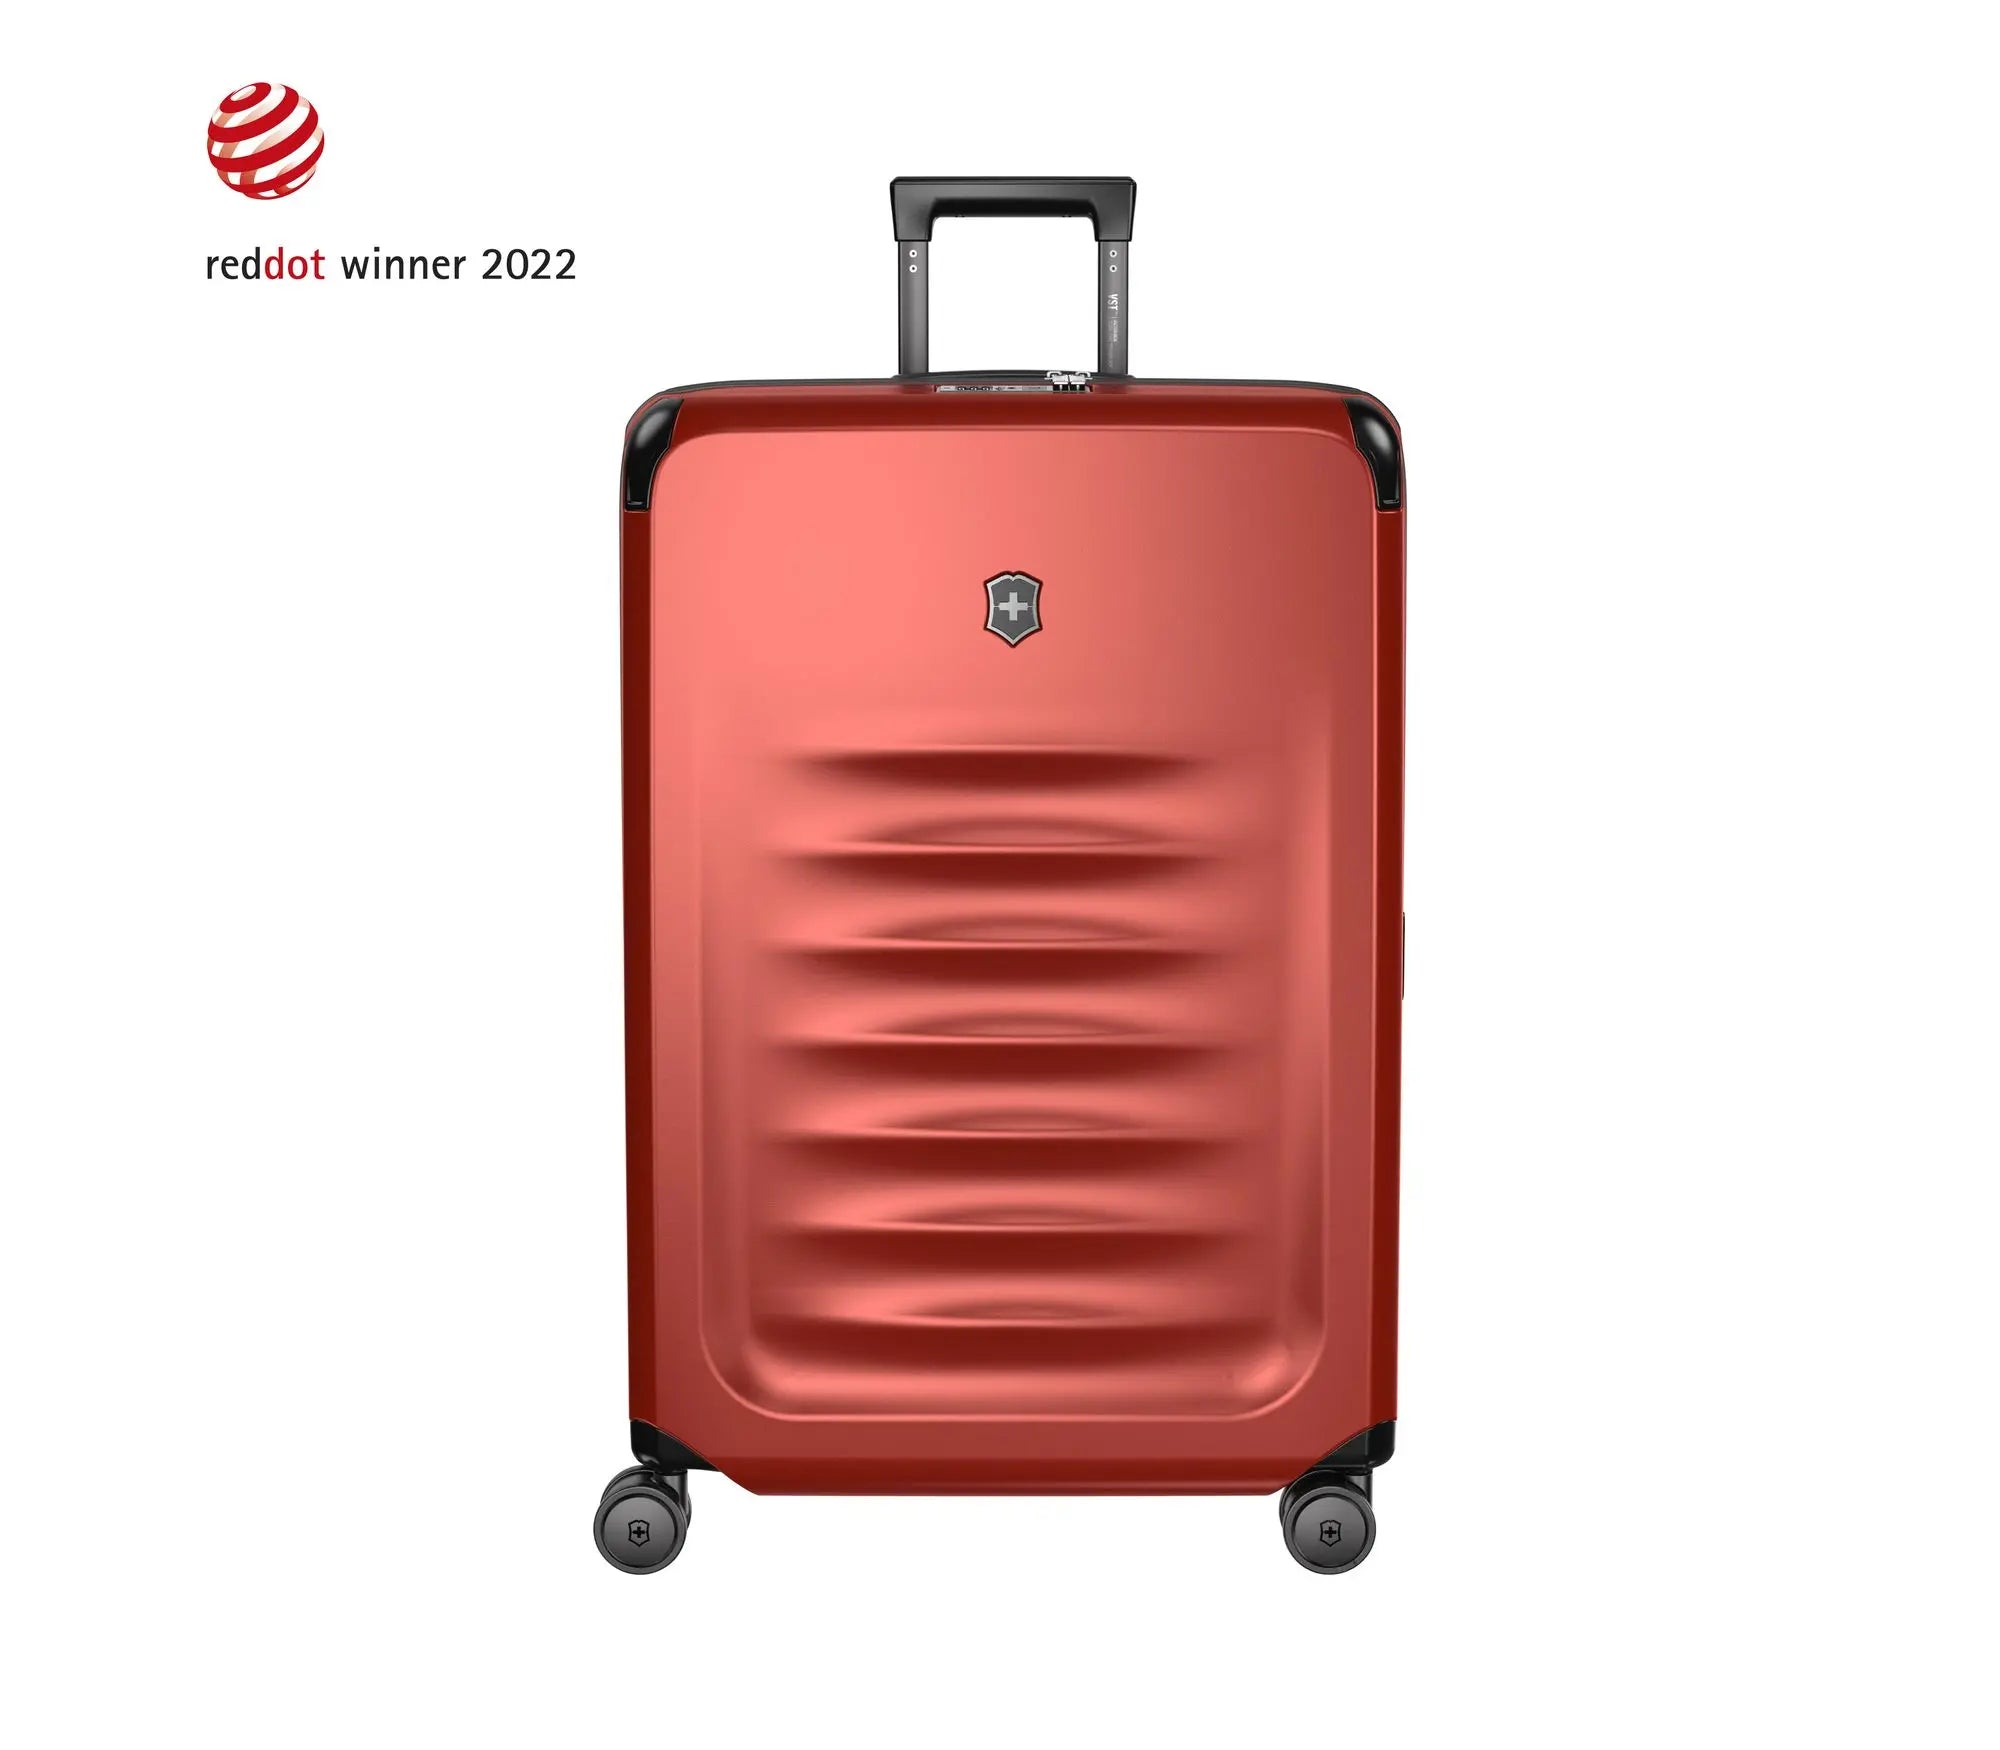 Spectra 3.0 Expandable Large Case Vx 30" - Voyage Luggage